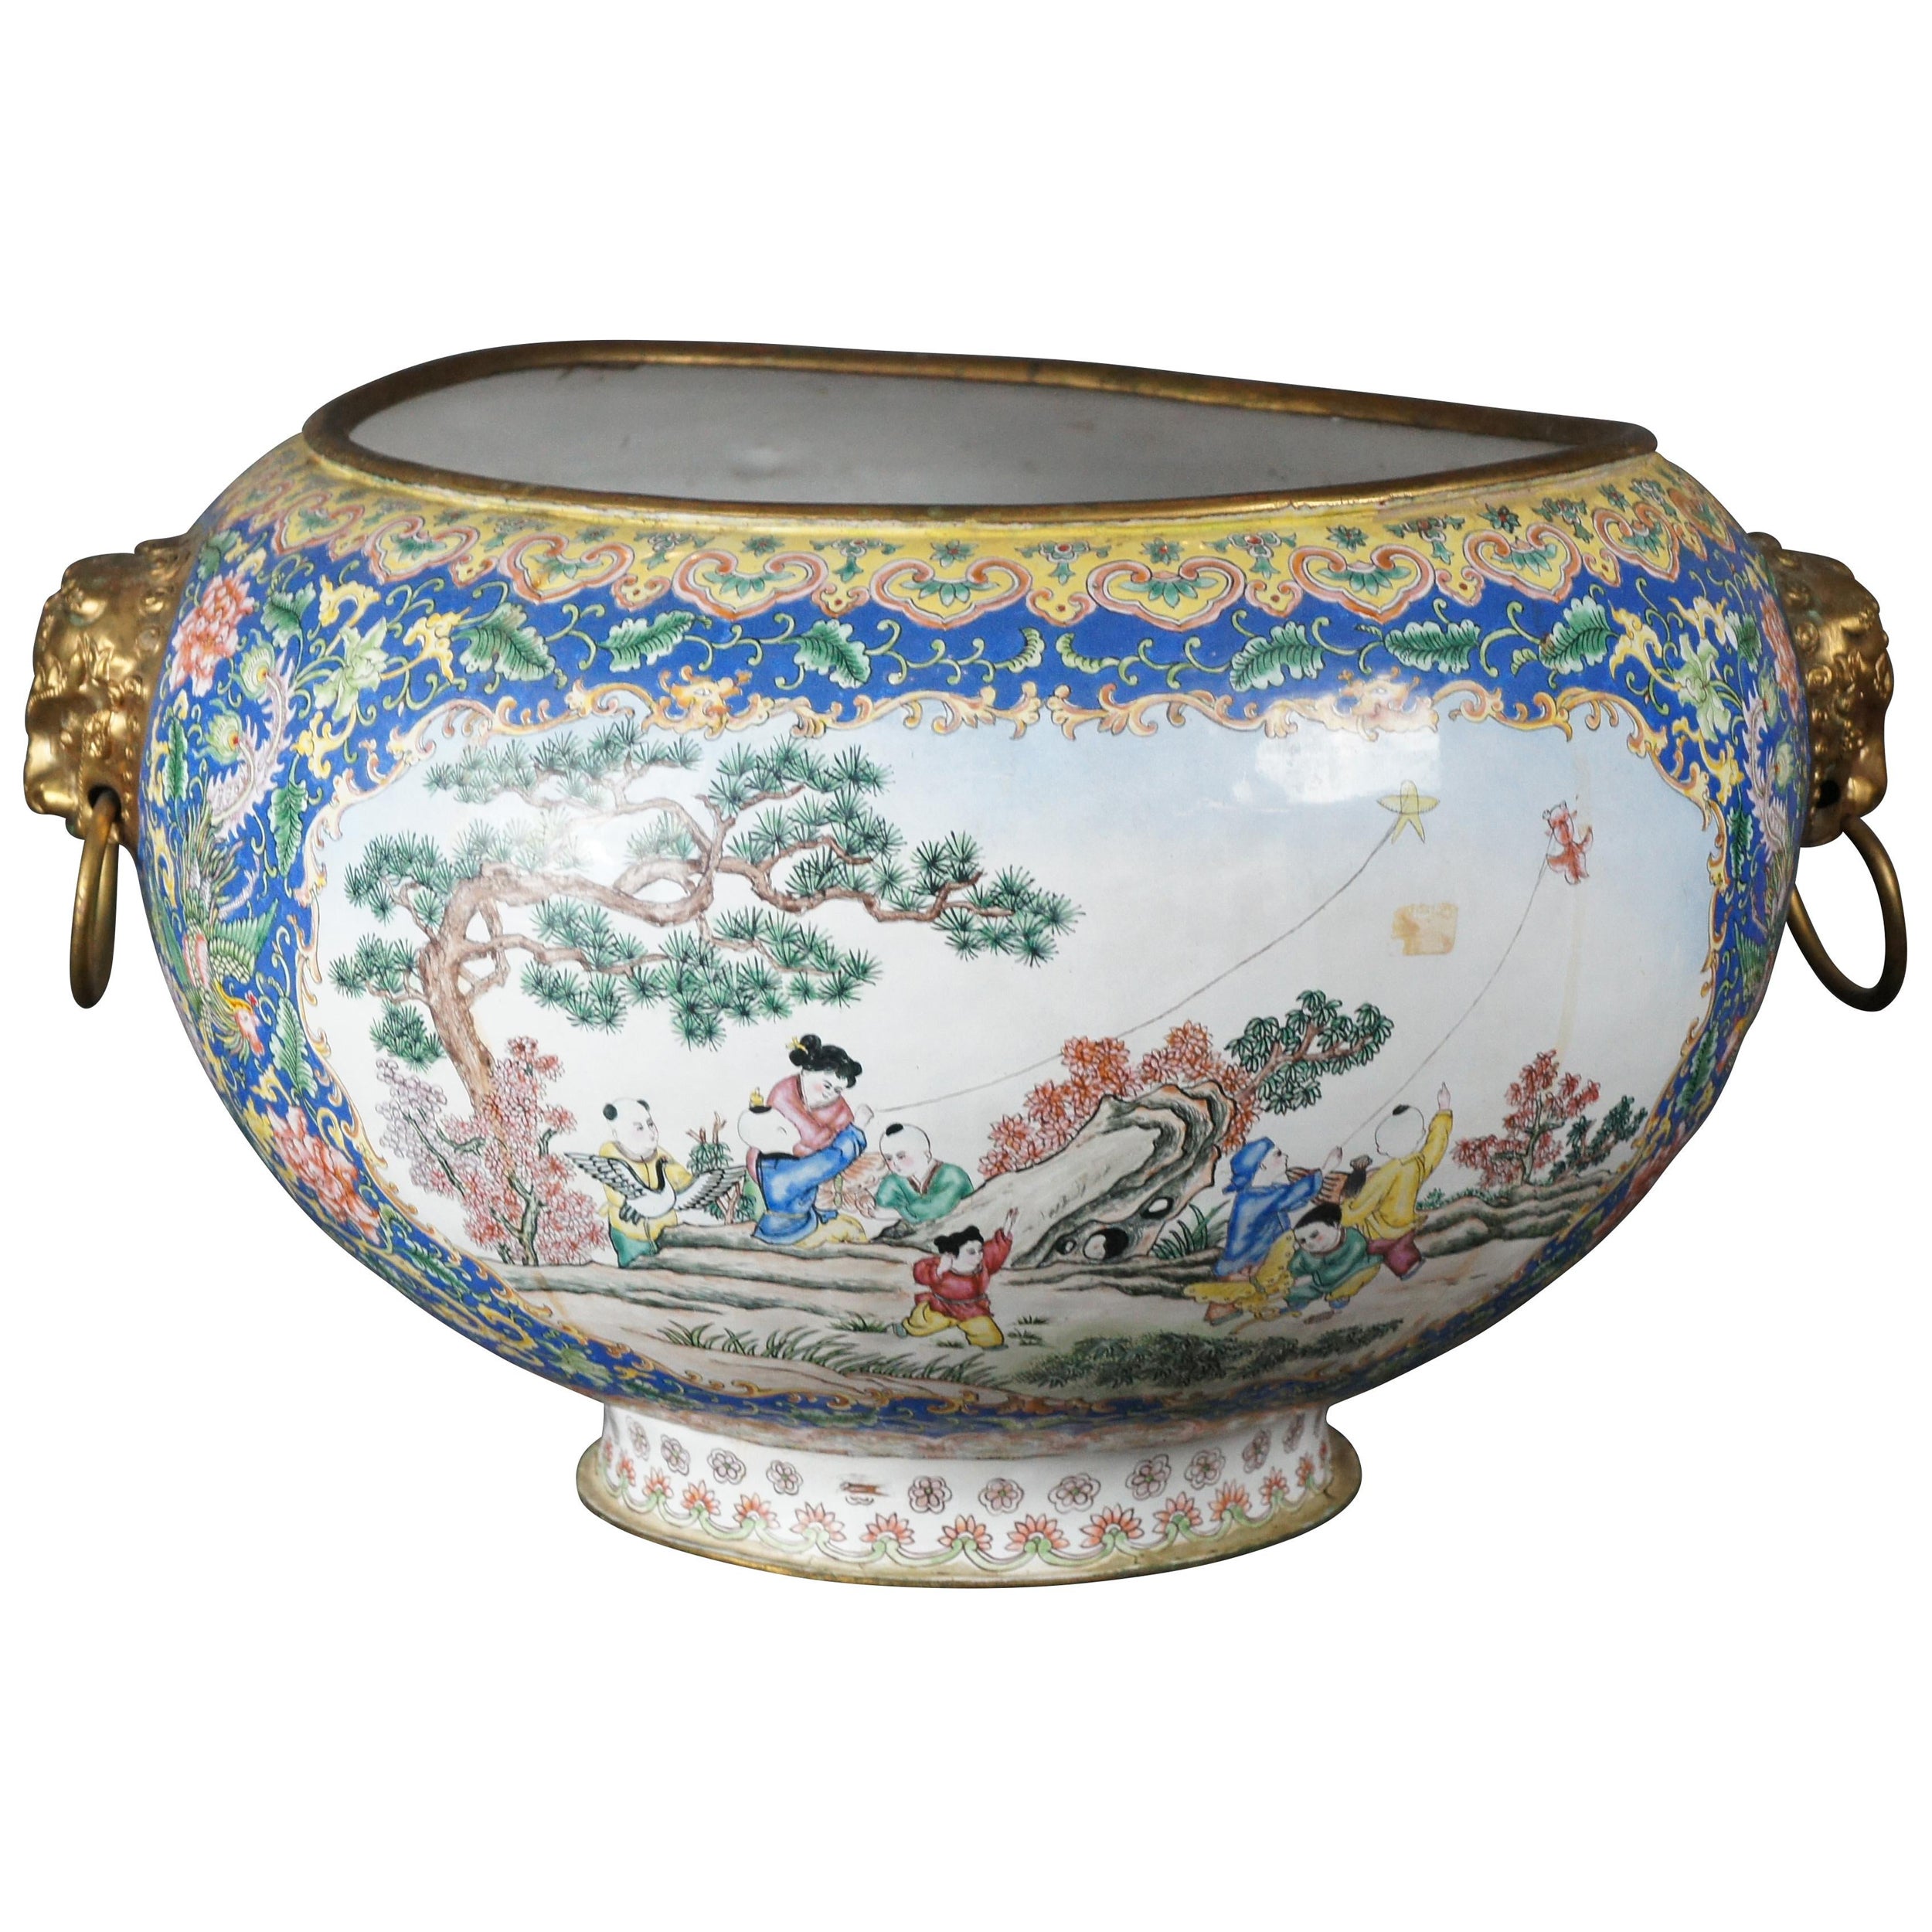 Antique Chinese Canton Enamel on Copper Jaridiniere Fish Bowl Gilt Metal Handles